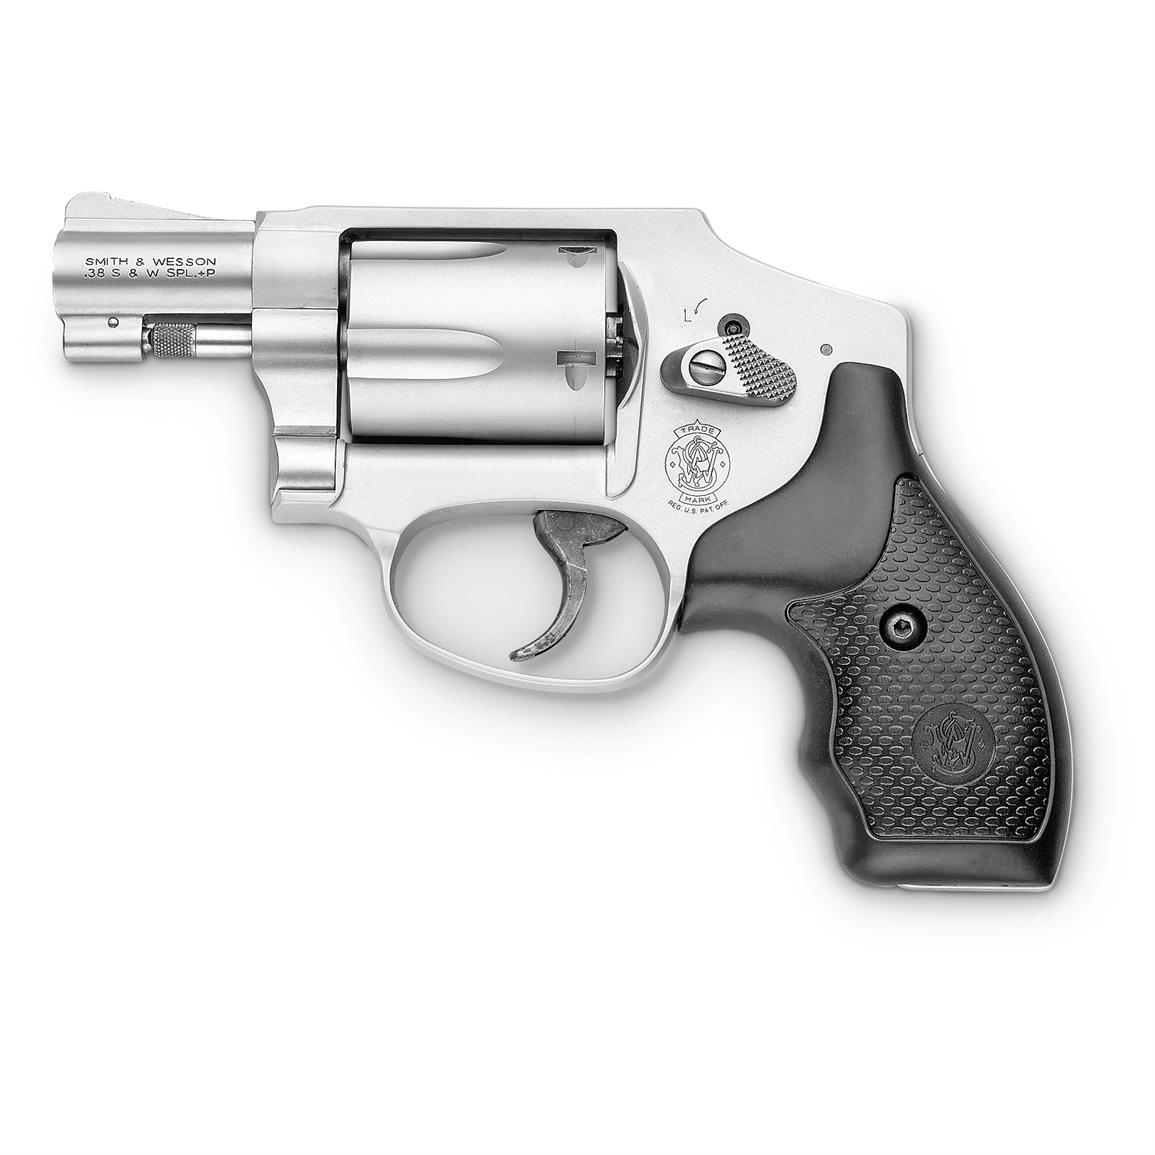 Smith & Wesson Model 642, Revolver, .38 Special+P, 1.875" Barrel, 5